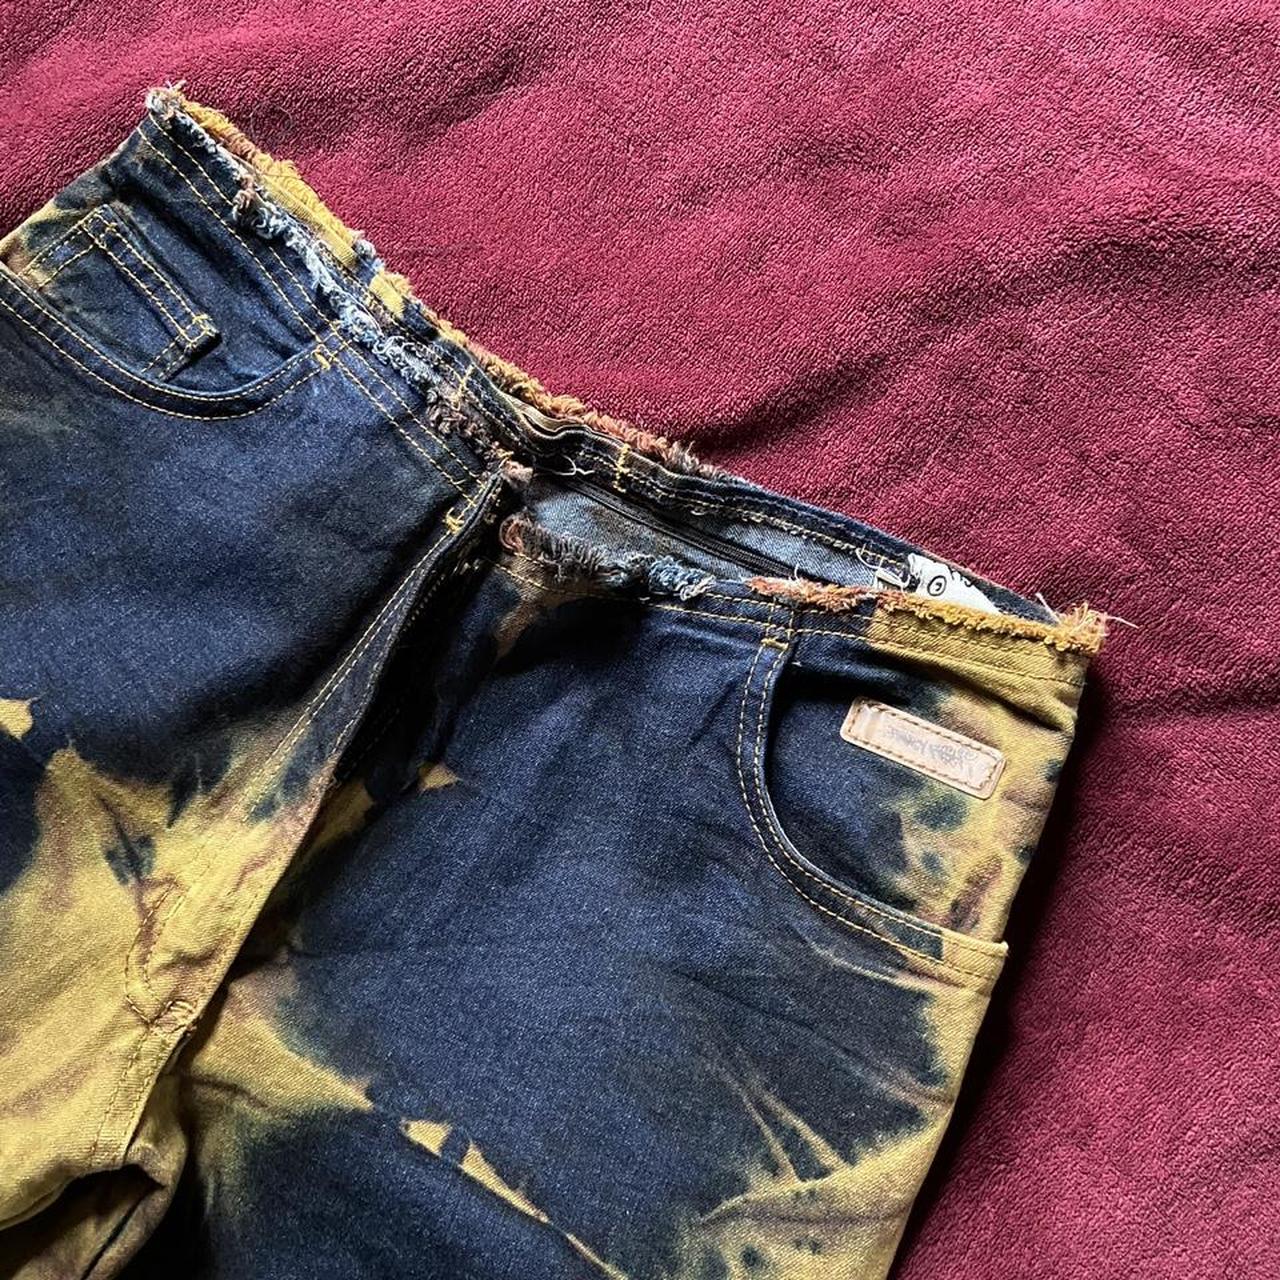 30x30 hand Sowed punk jeans additional hand sewn - Depop